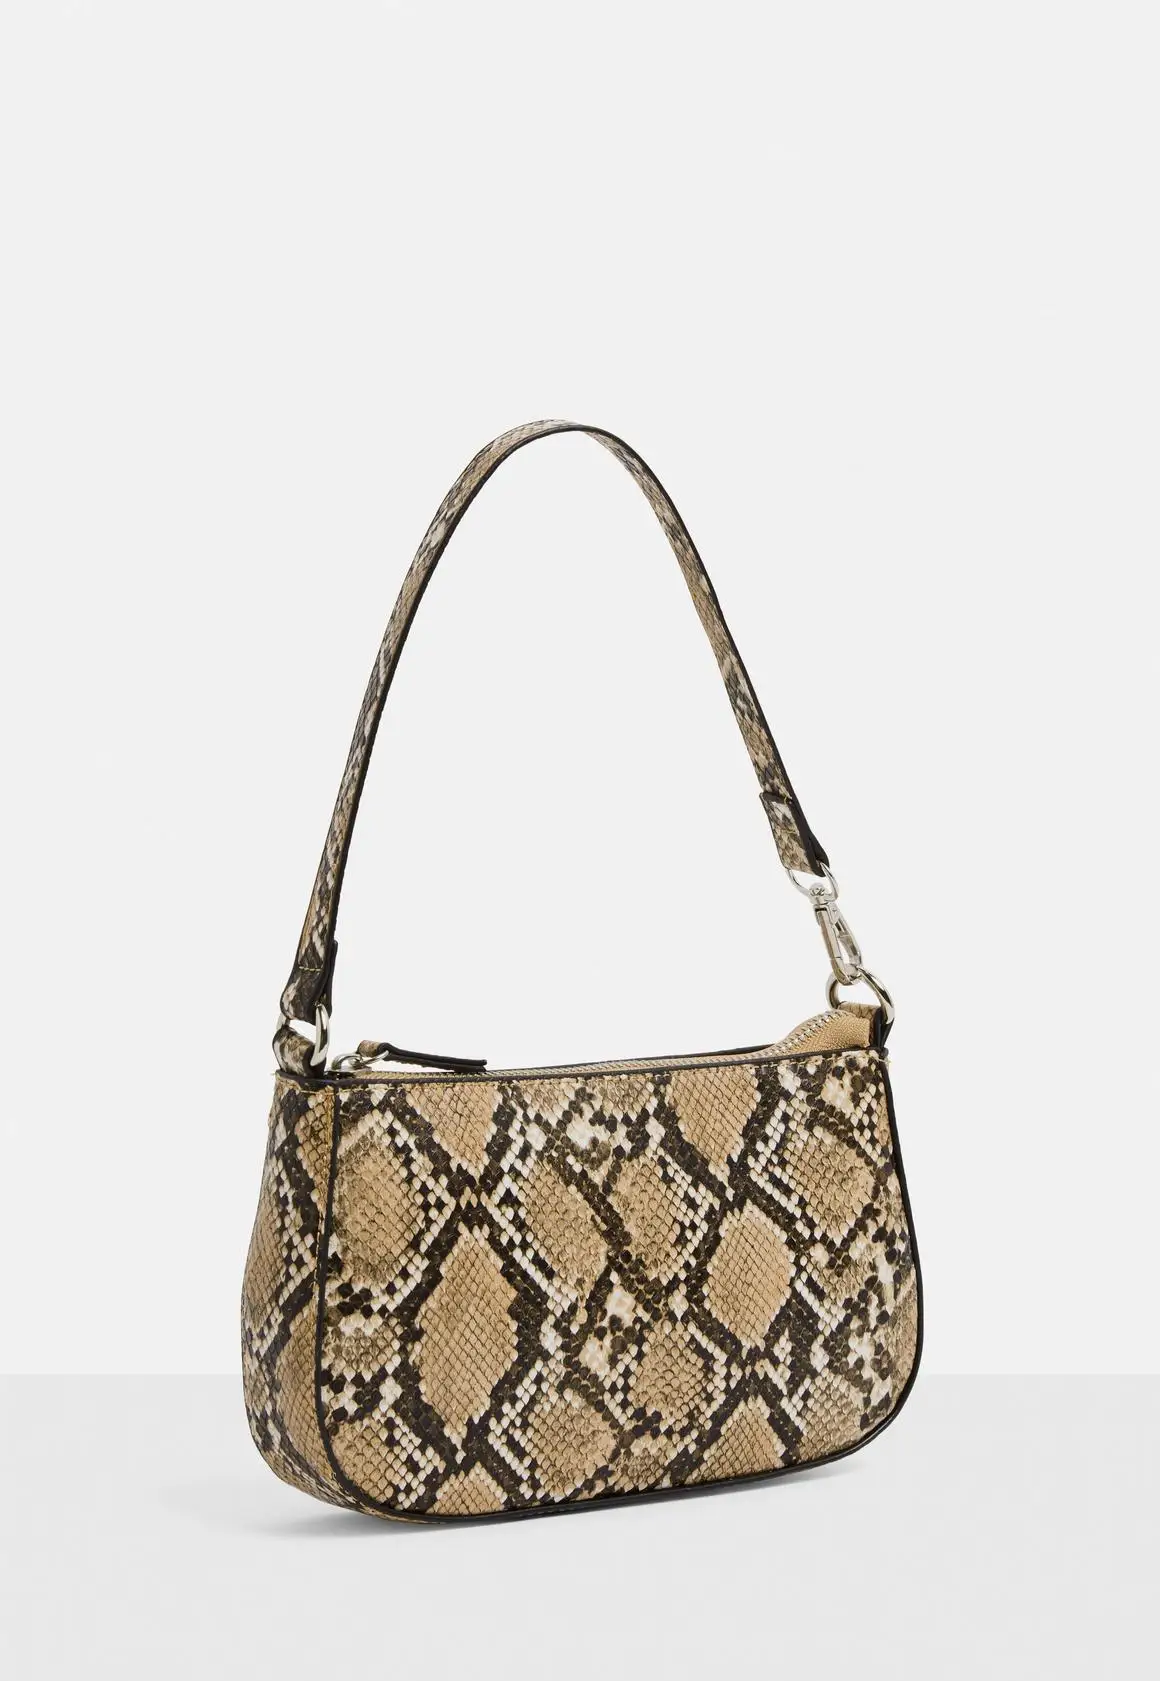 ladies leather handbags online